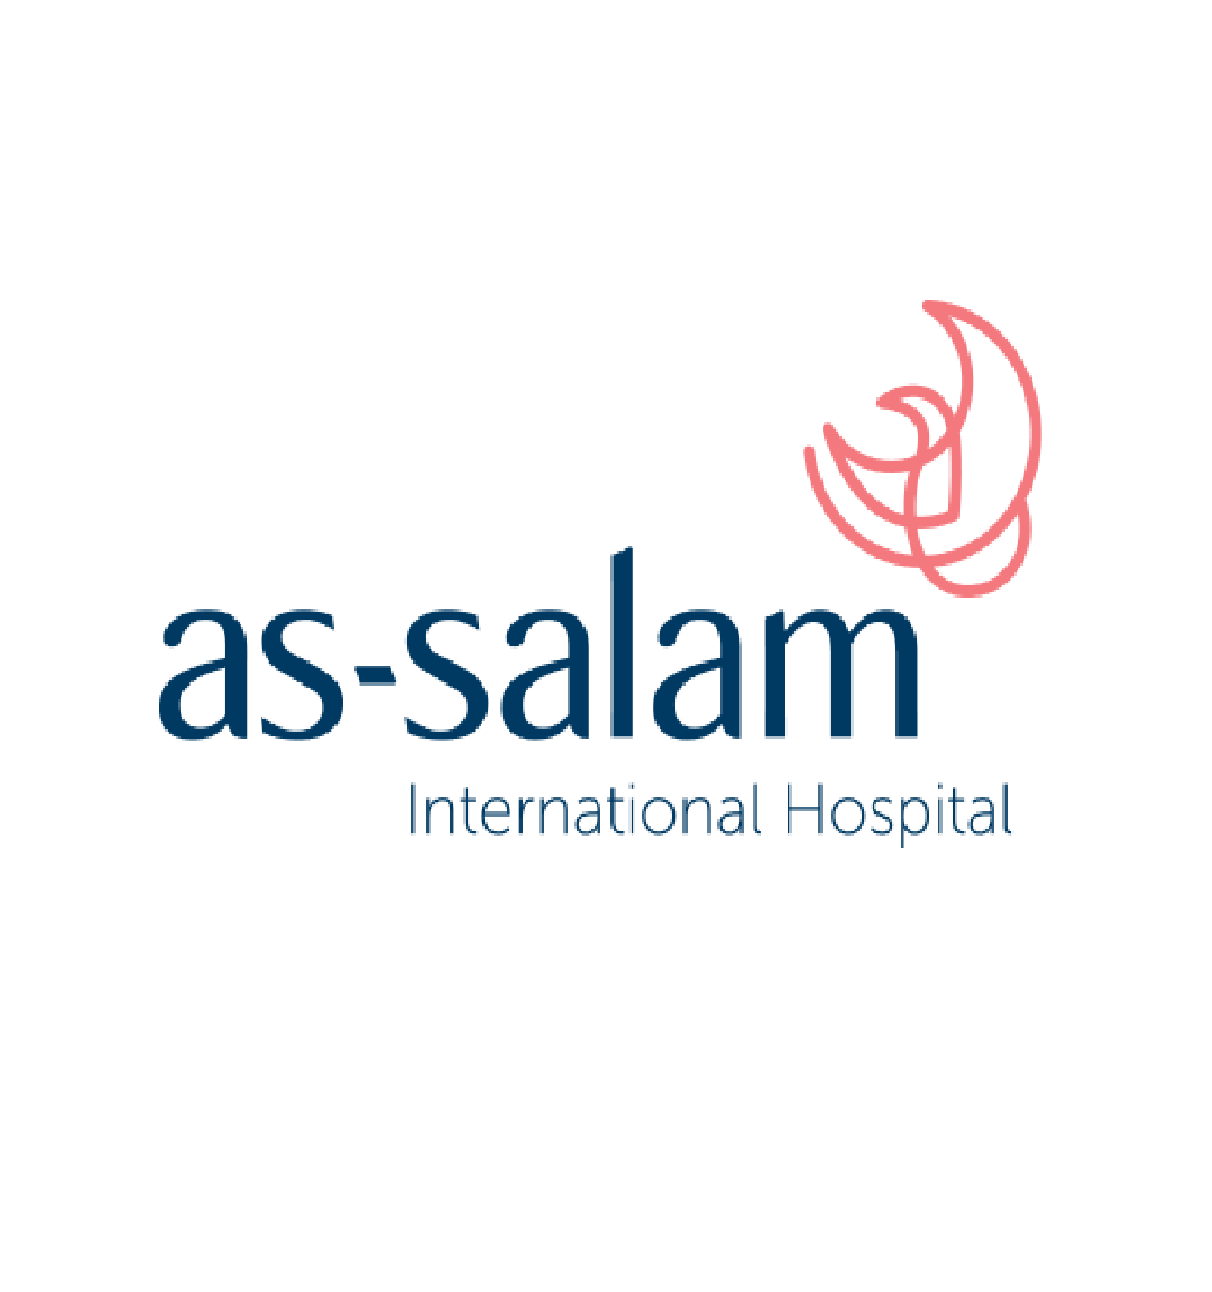 As-Salam International Hospital